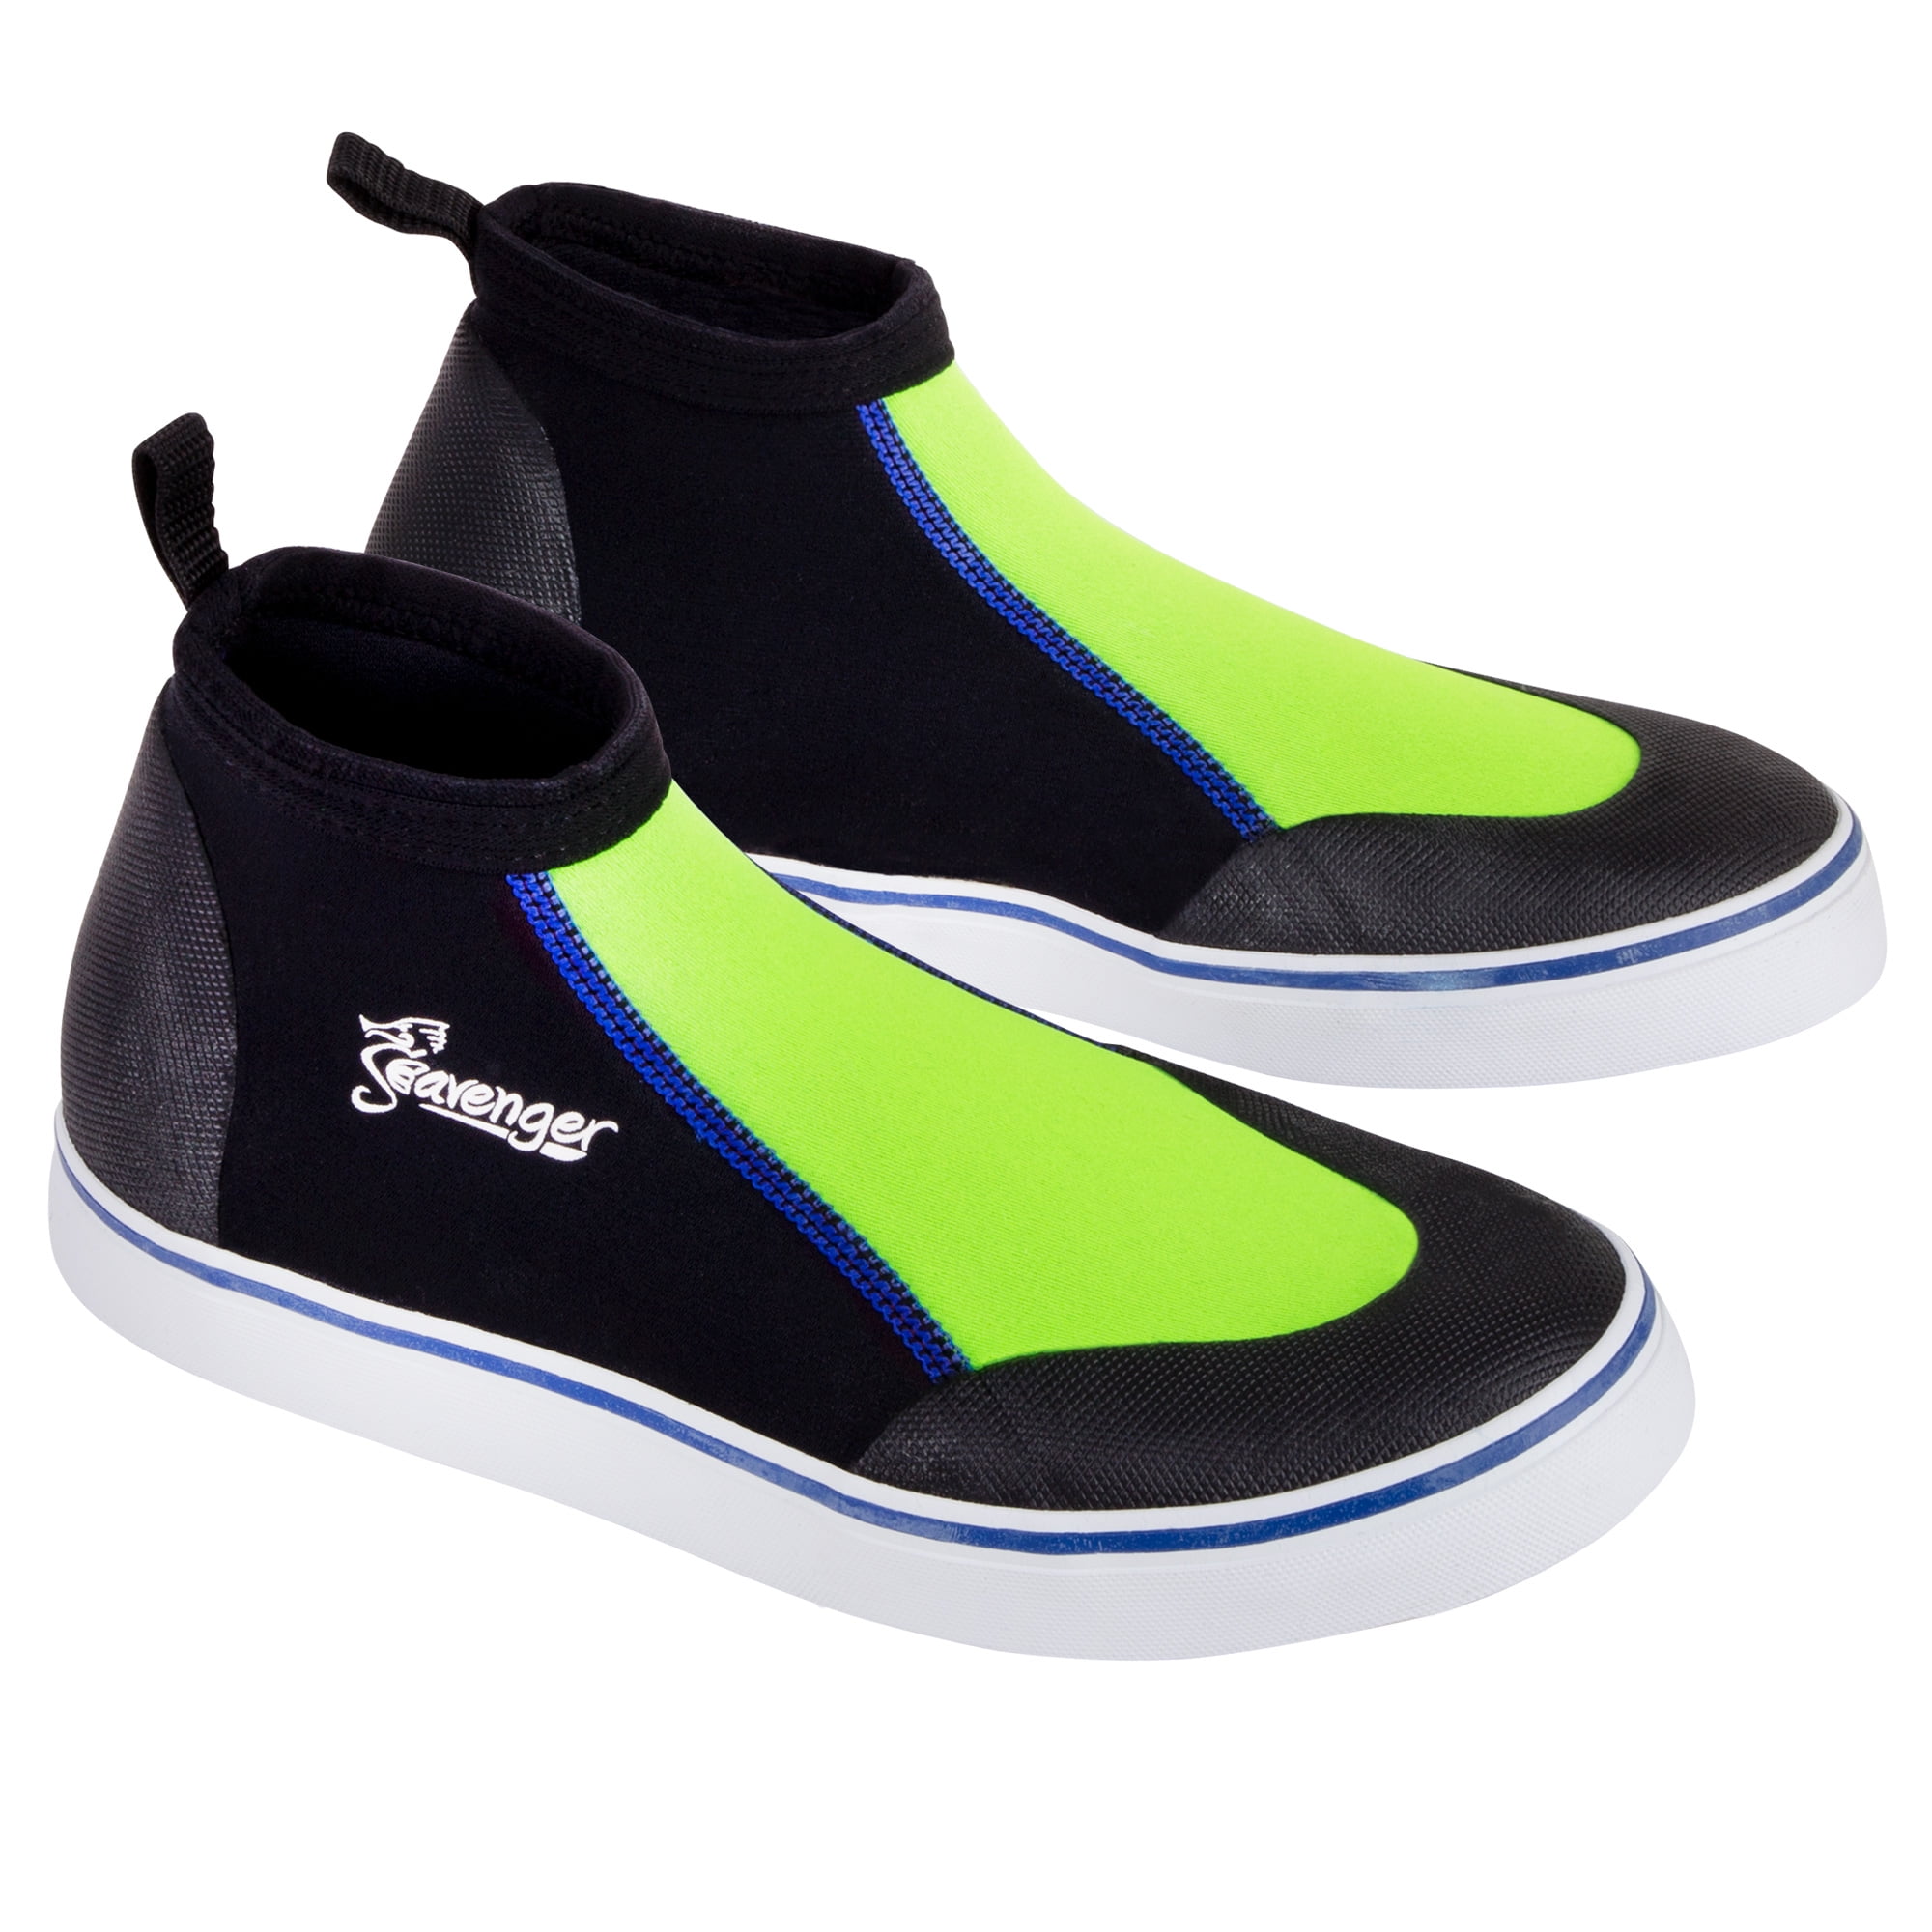 Seavenger Sneaker Style Aqua Shoes 3mm Neoprene High Top Dive Snorkel Pink 